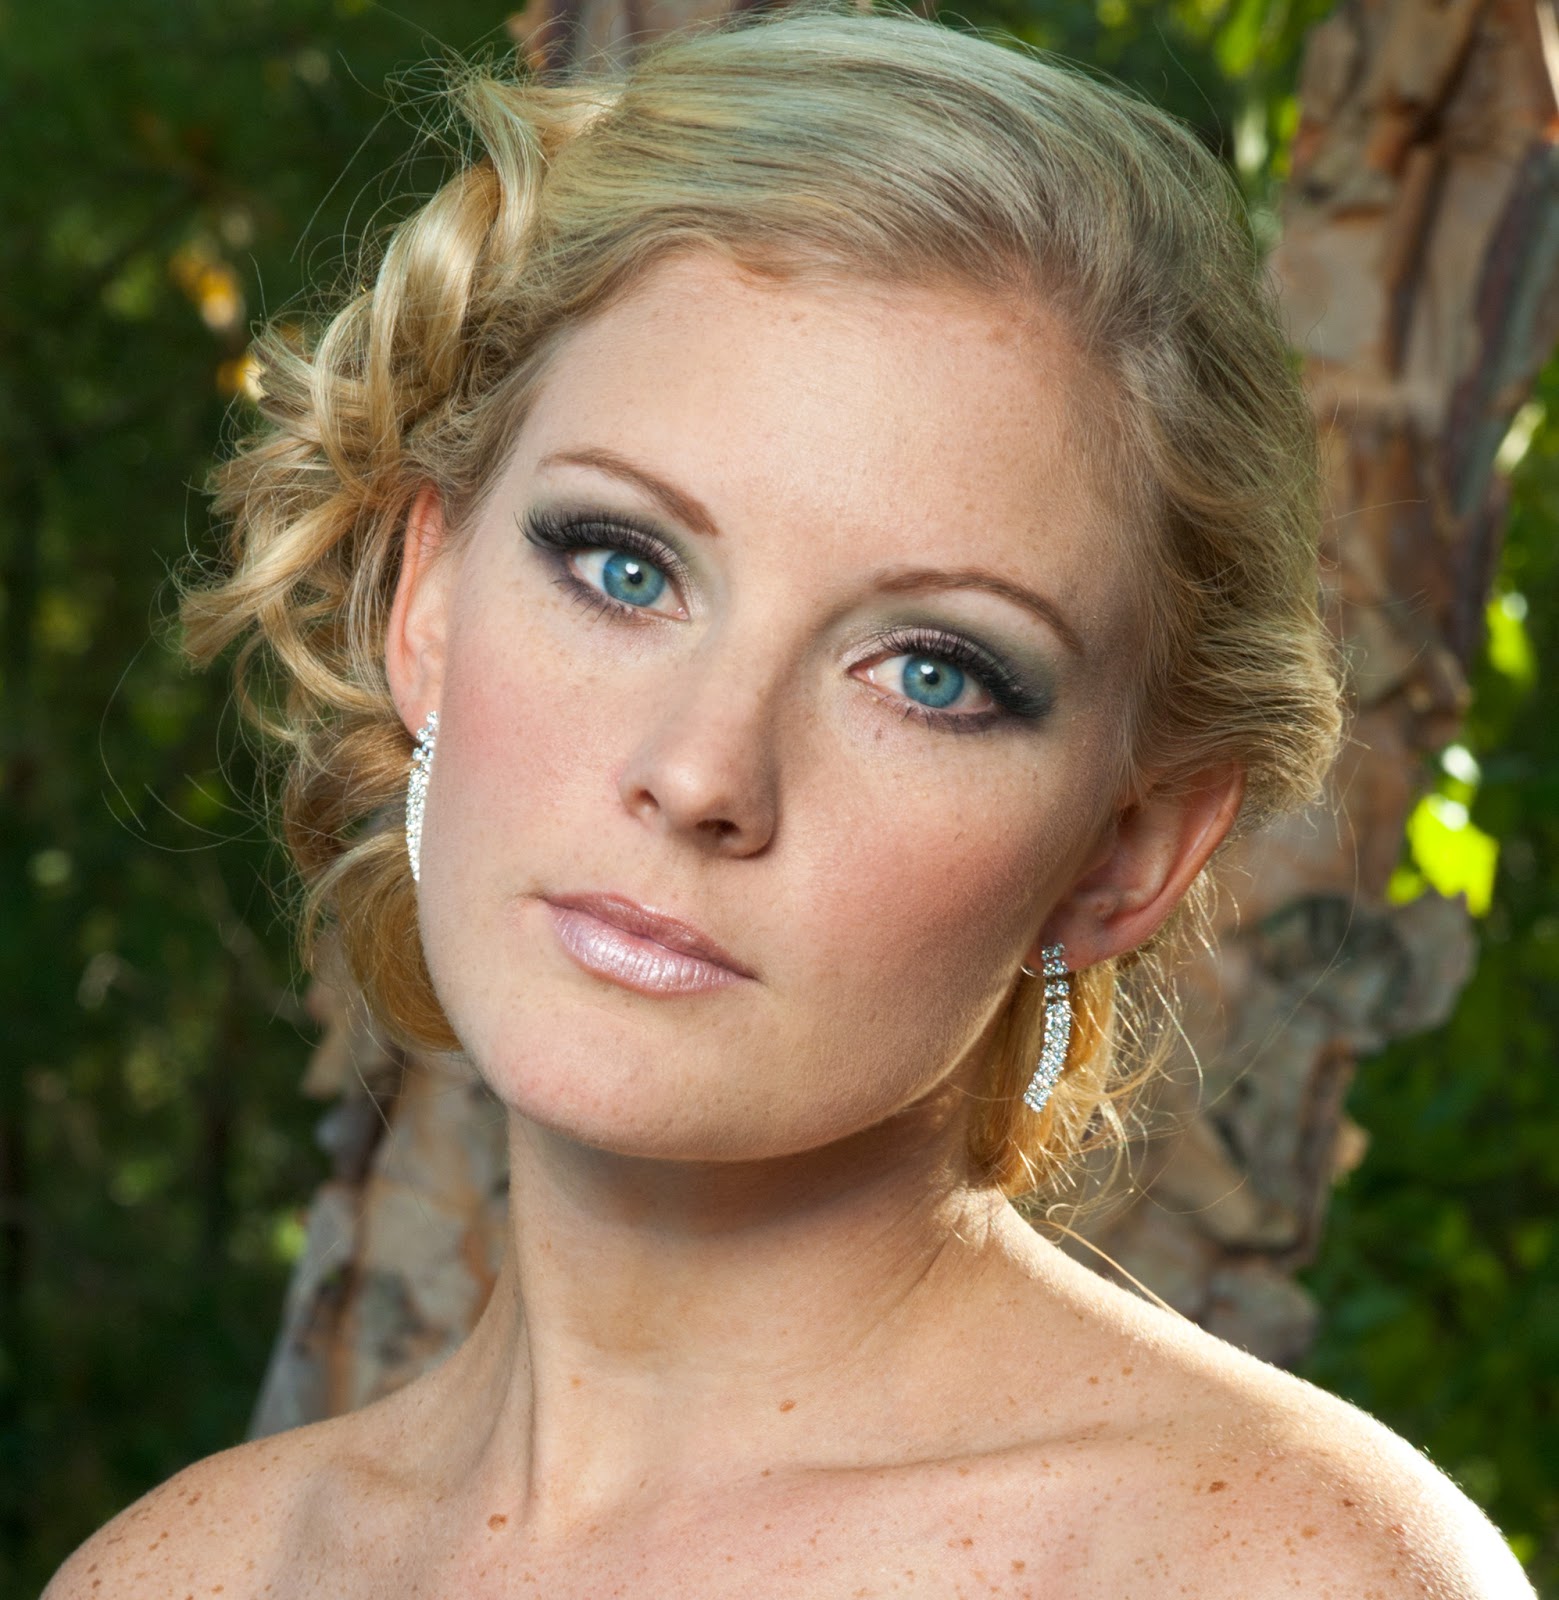 Blondes eyes tips for makeup with blue dubai neckline shapes